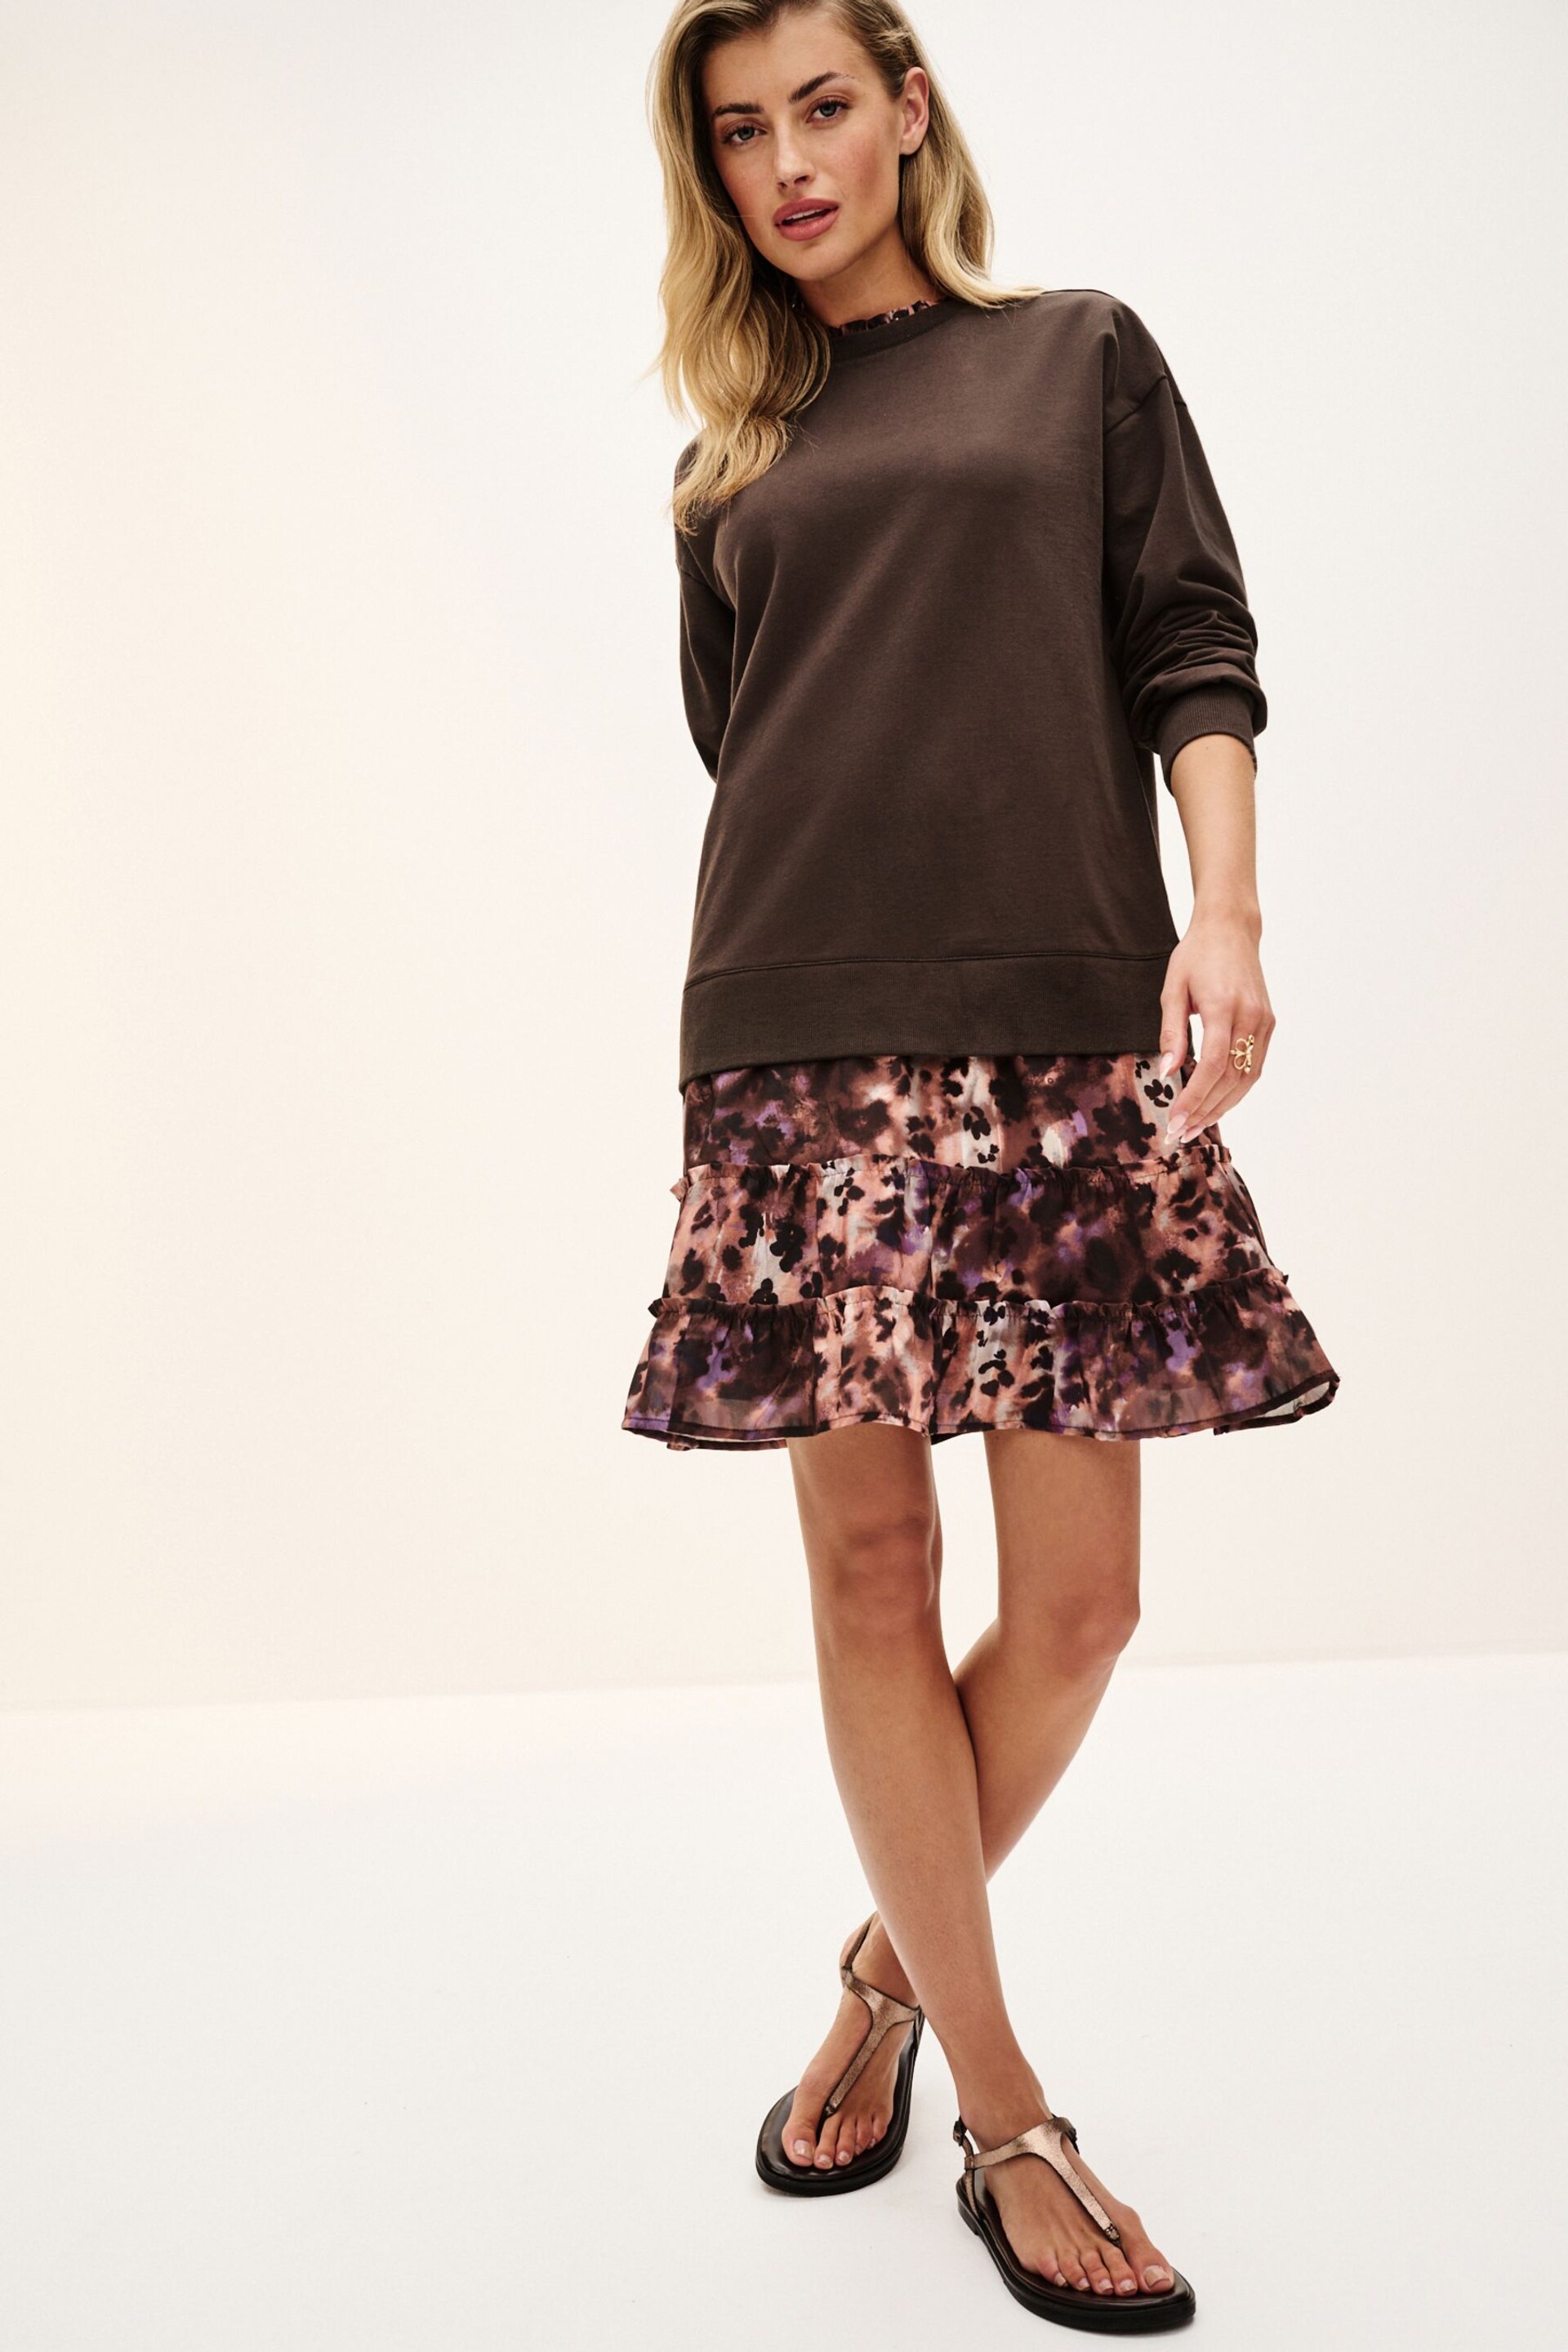 Chocolate Brown Animal Layered Sweatshirt Long Sleeve Animal Print Dress - Image 2 of 6